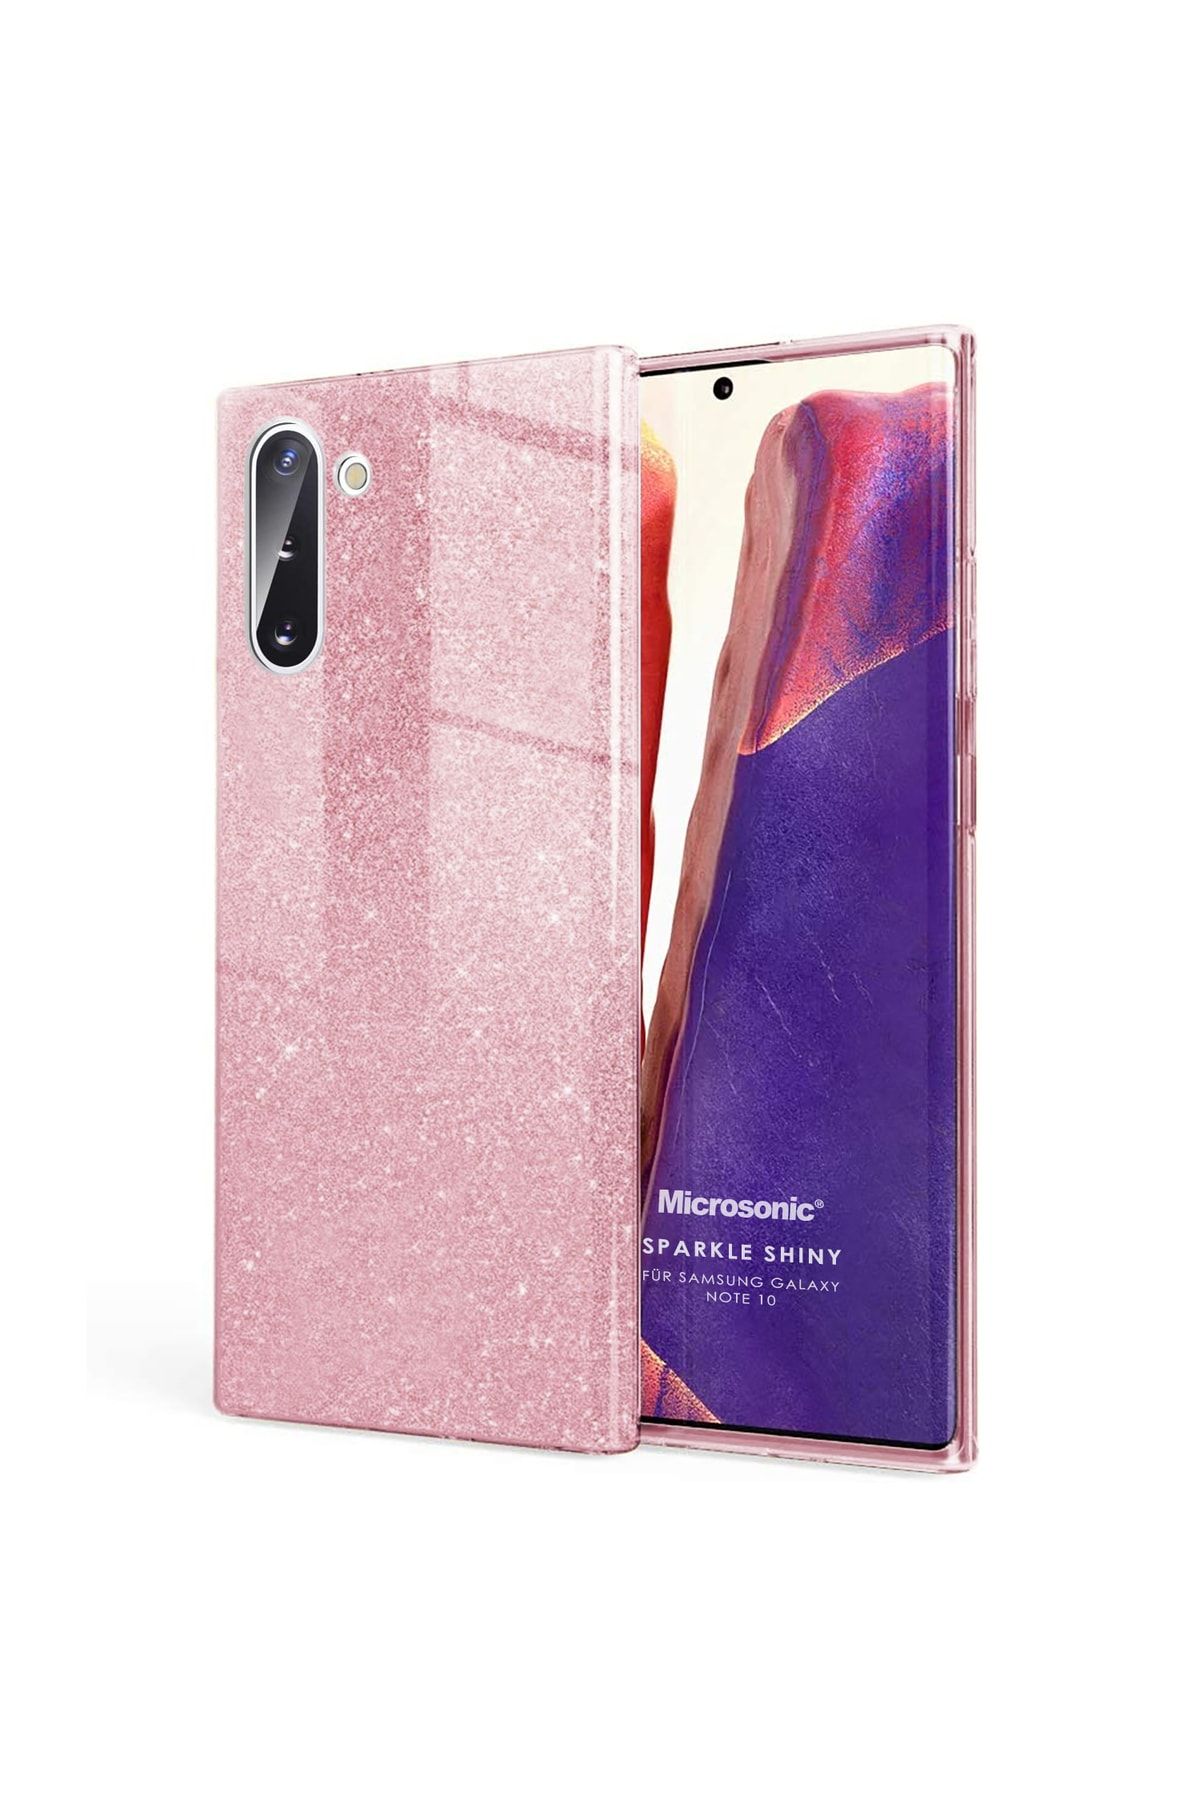 Microsonic Galaxy Note 10 Uyumlu Kılıf Sparkle Shiny Rose Gold